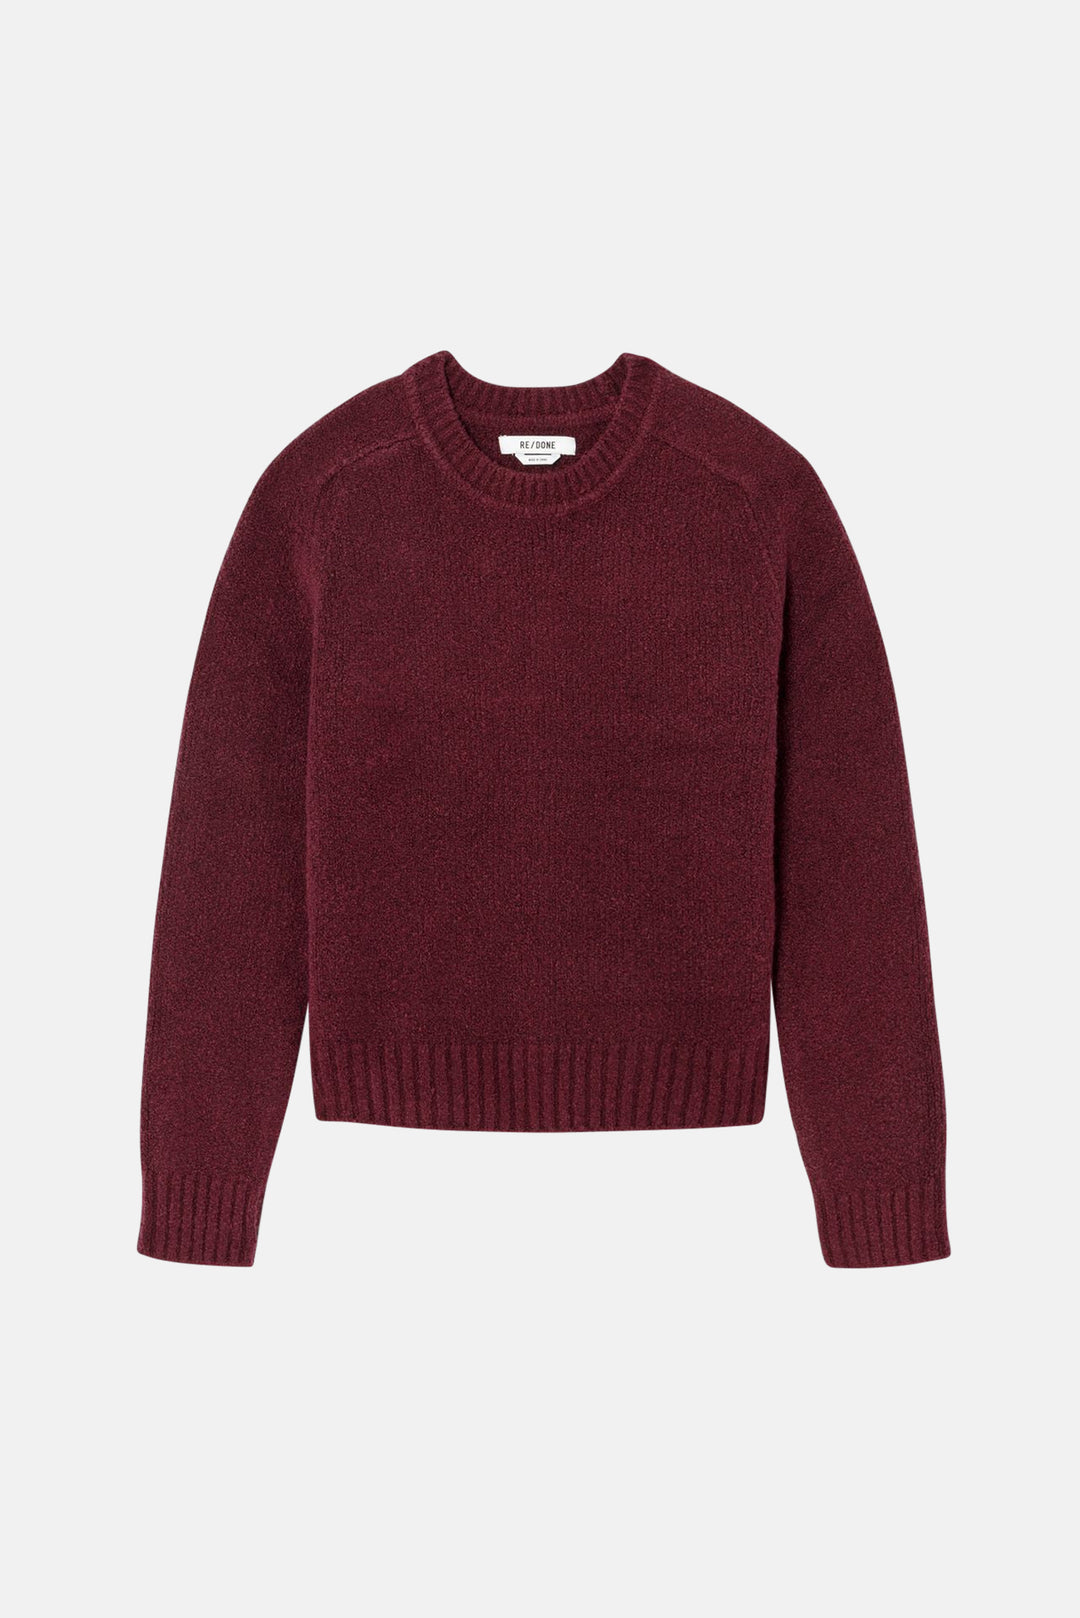 60s Shrunken Sweater Plum